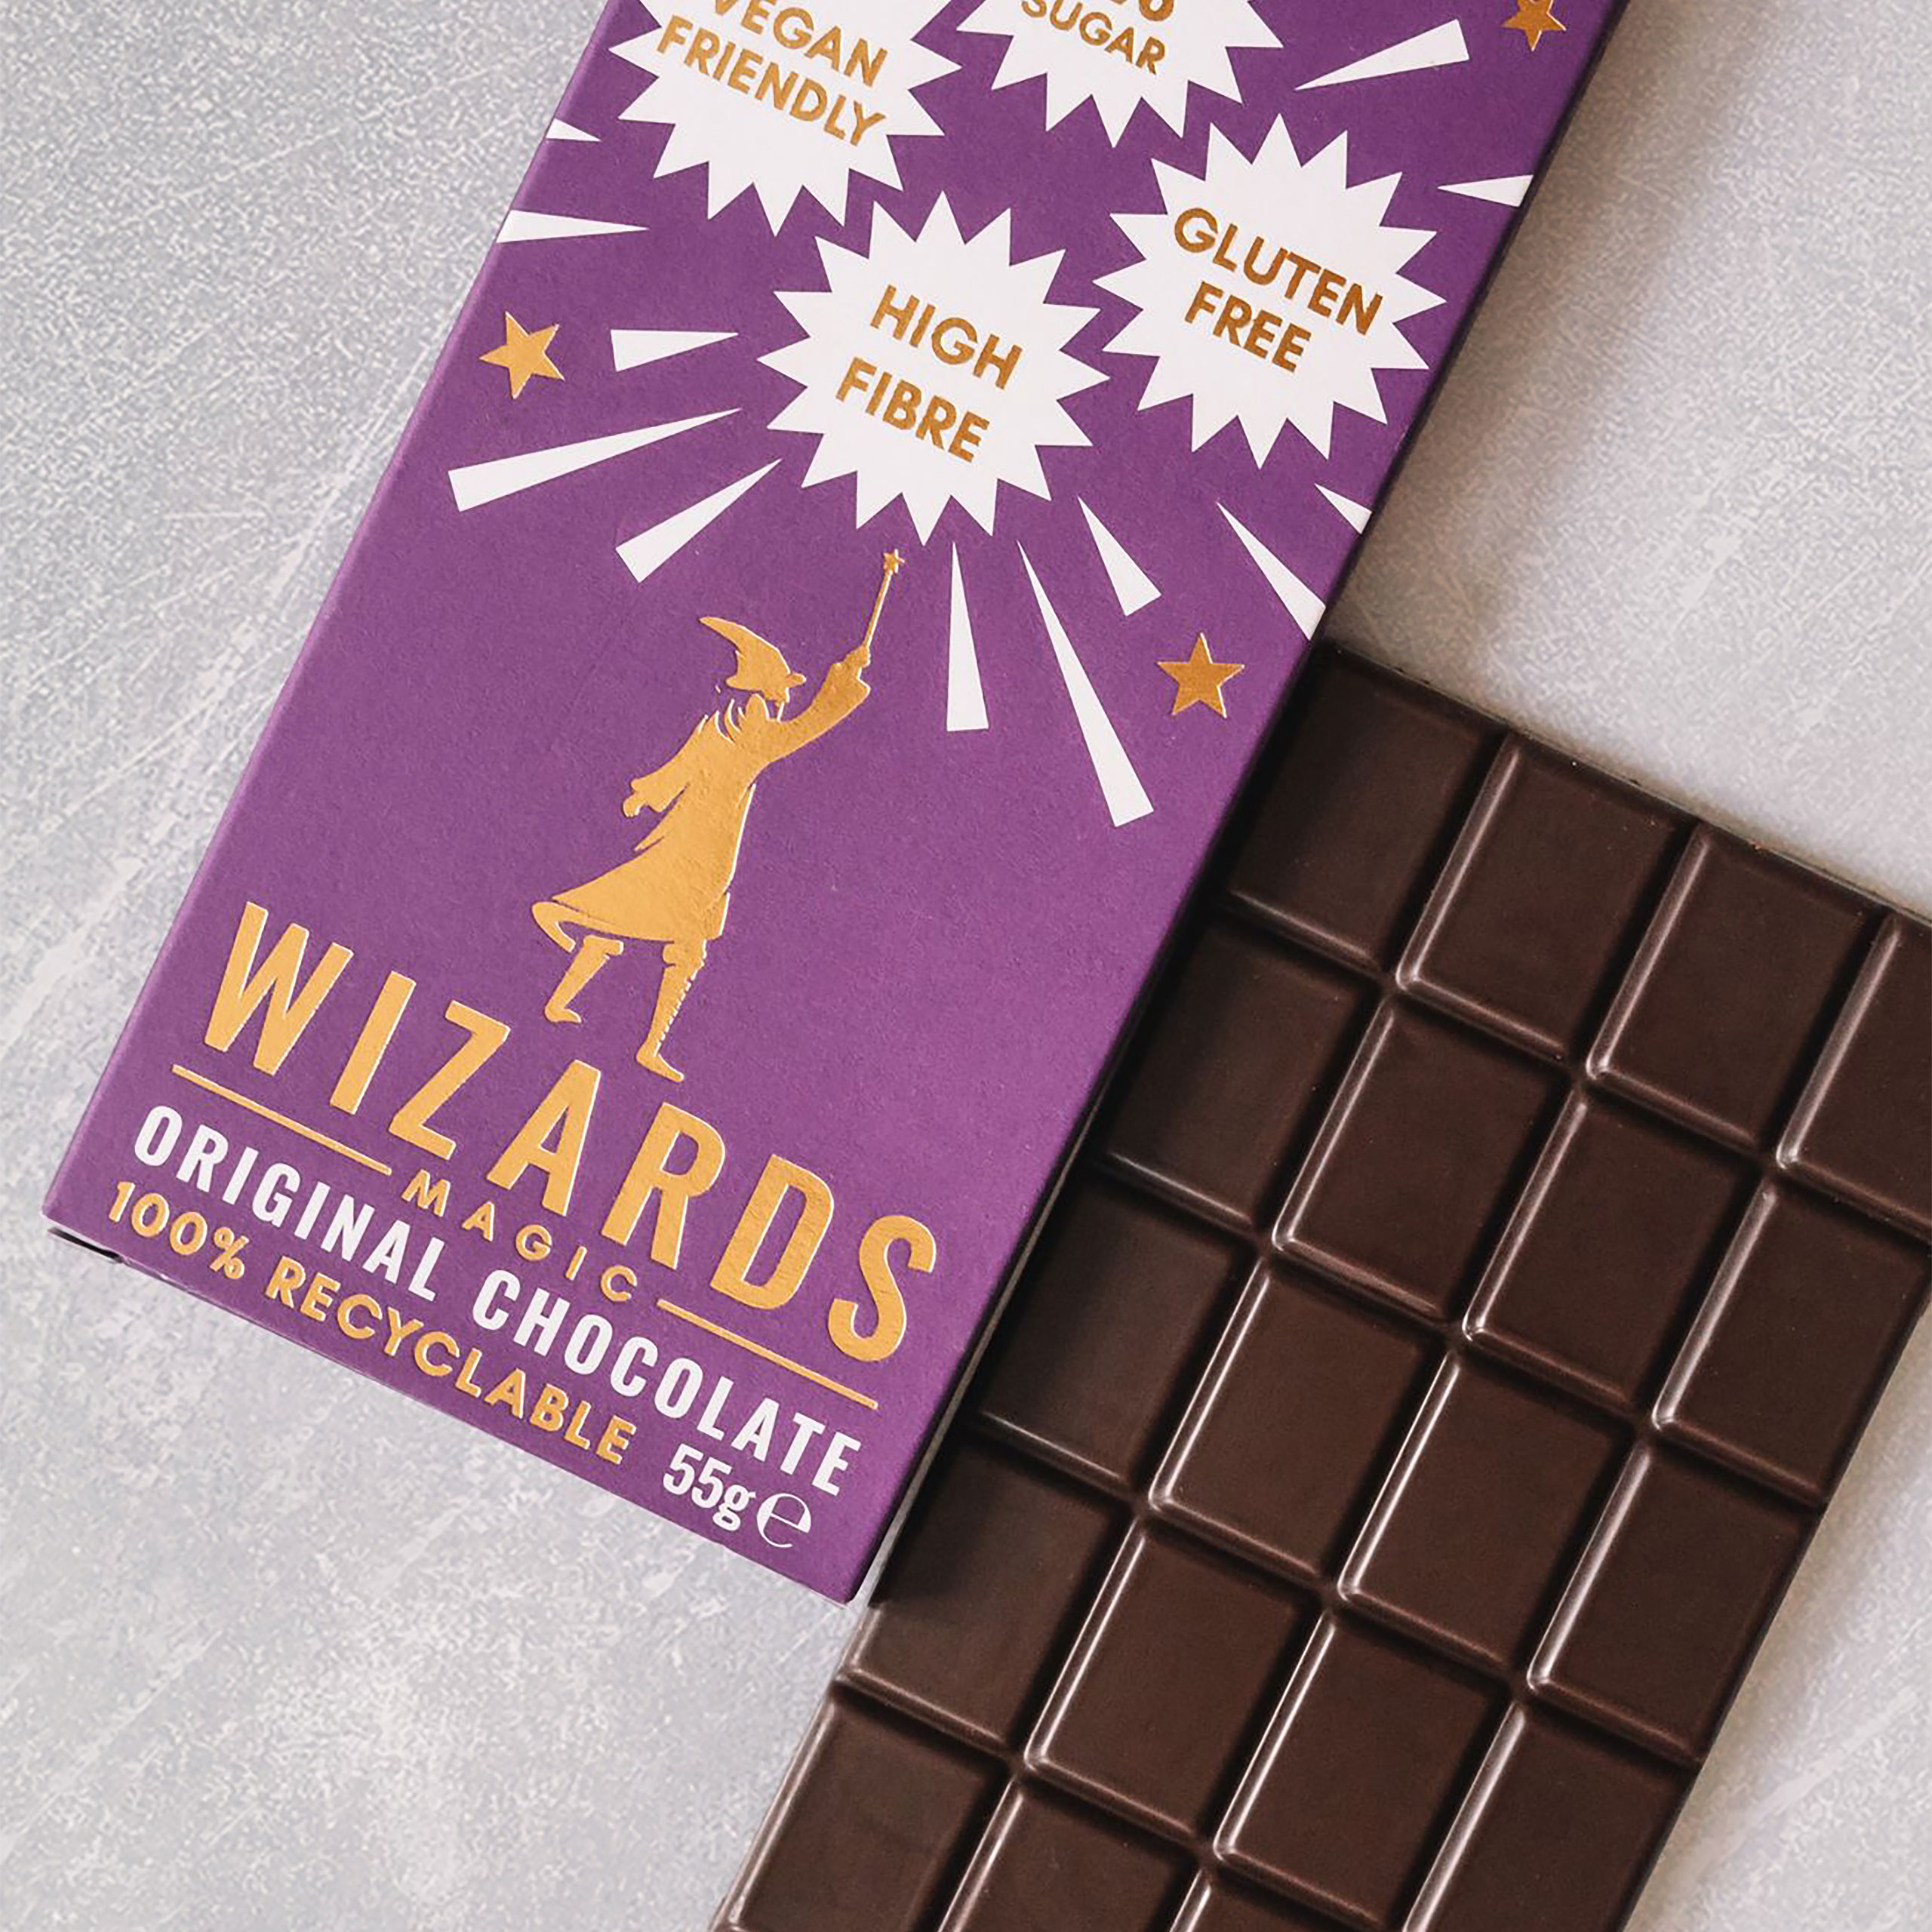 Wizards Magic - Originele Chocolade 12 repen